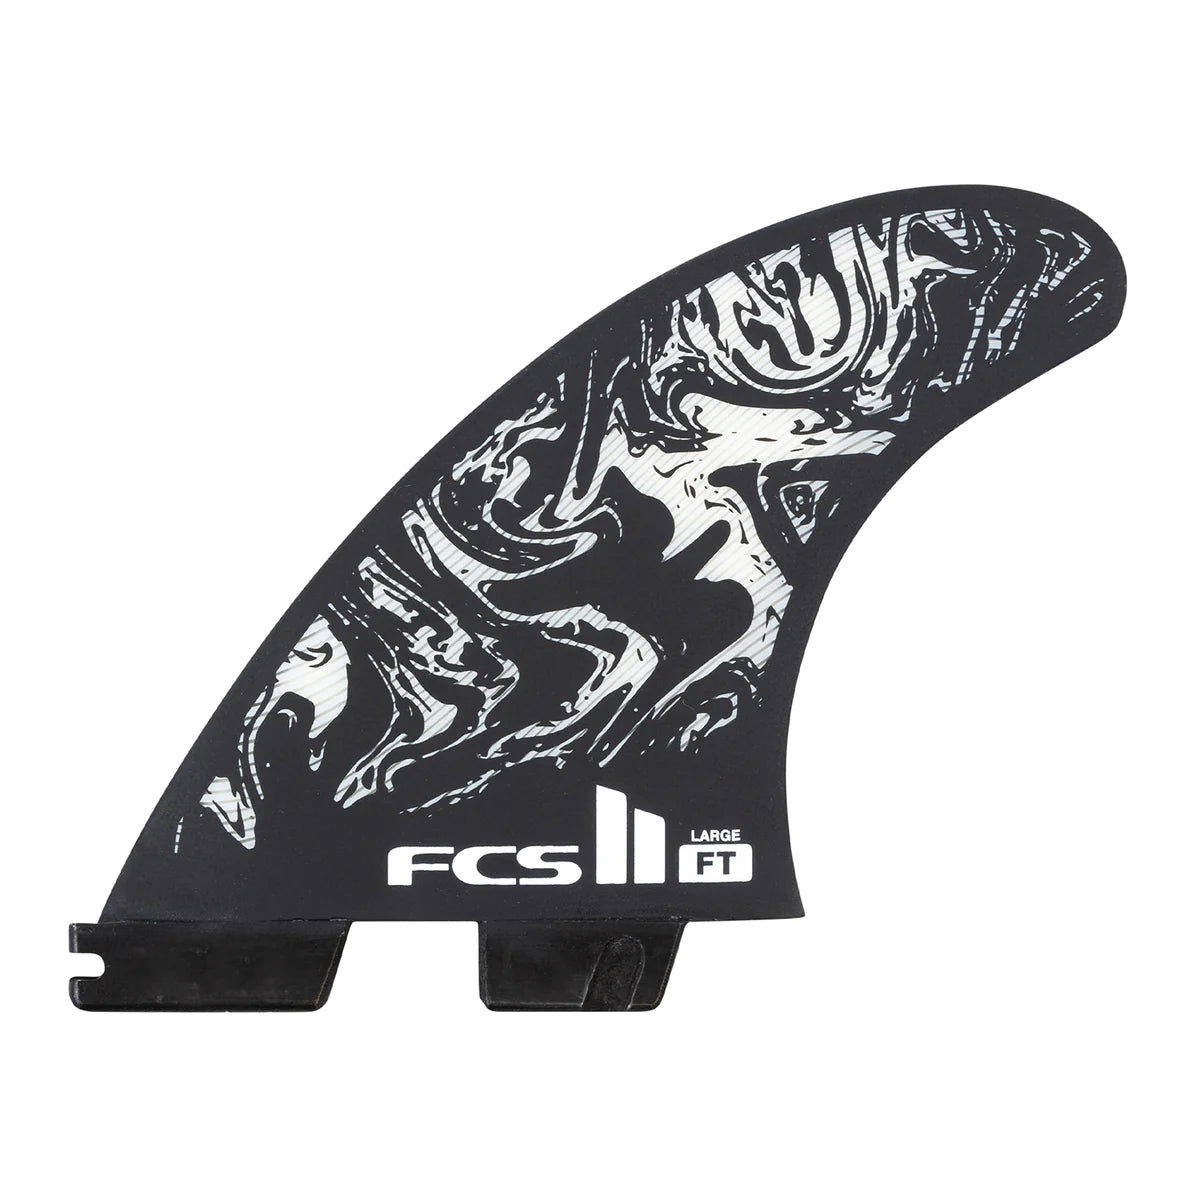 FCS II Filipe Toledo FT PC MEDIUM TRI FIN SET Air Core - Medium Large Fins Black White